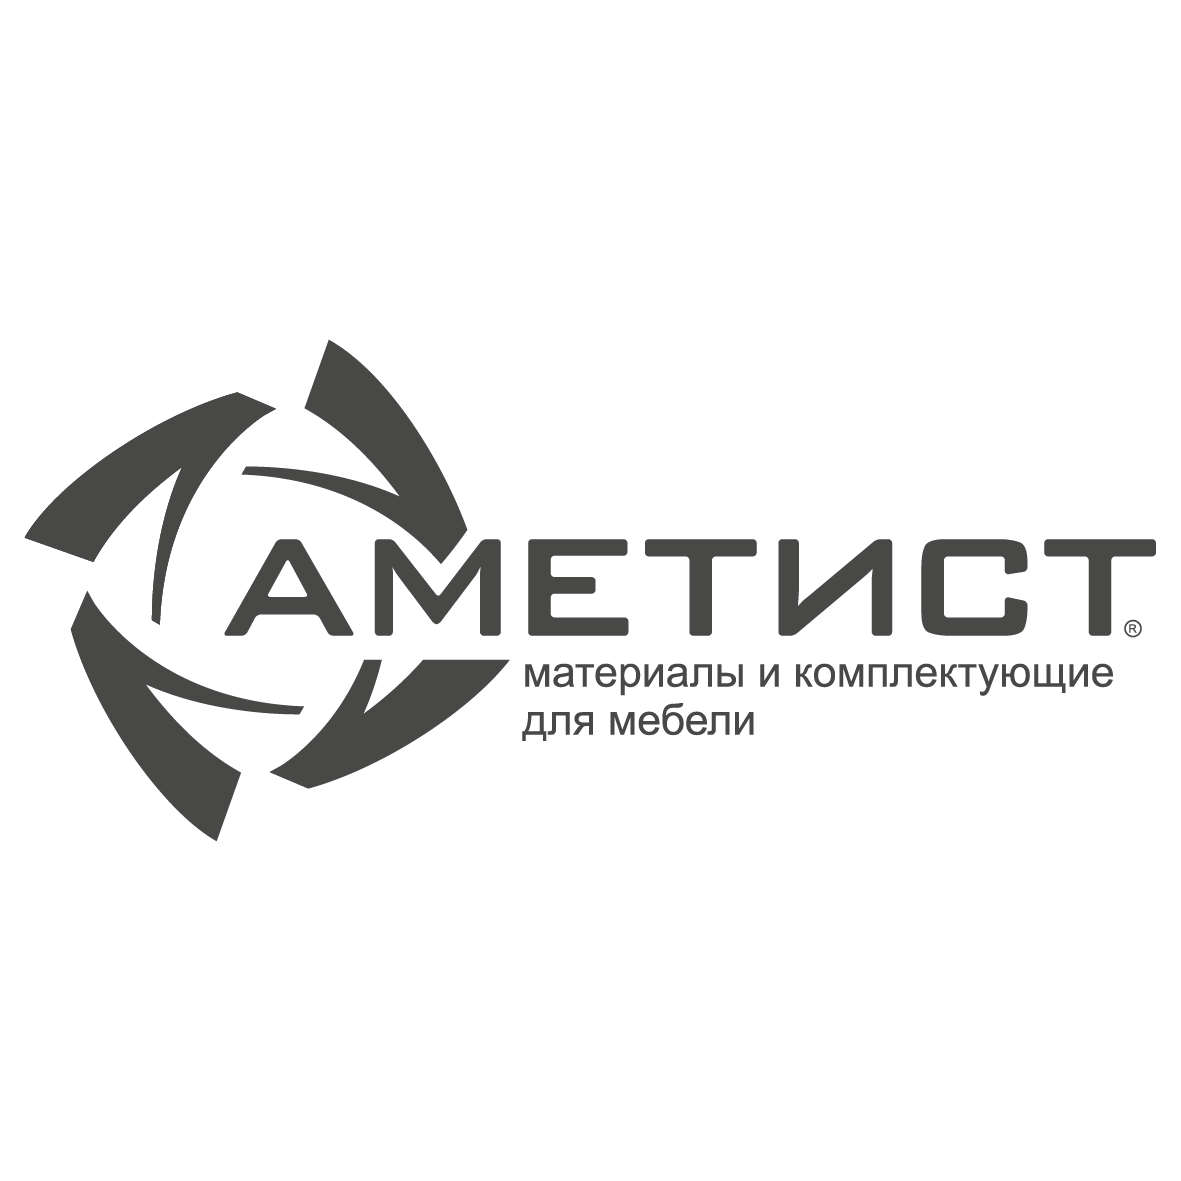 Управляющая компания аметист. Mebelit логотип. Chistetika лого.